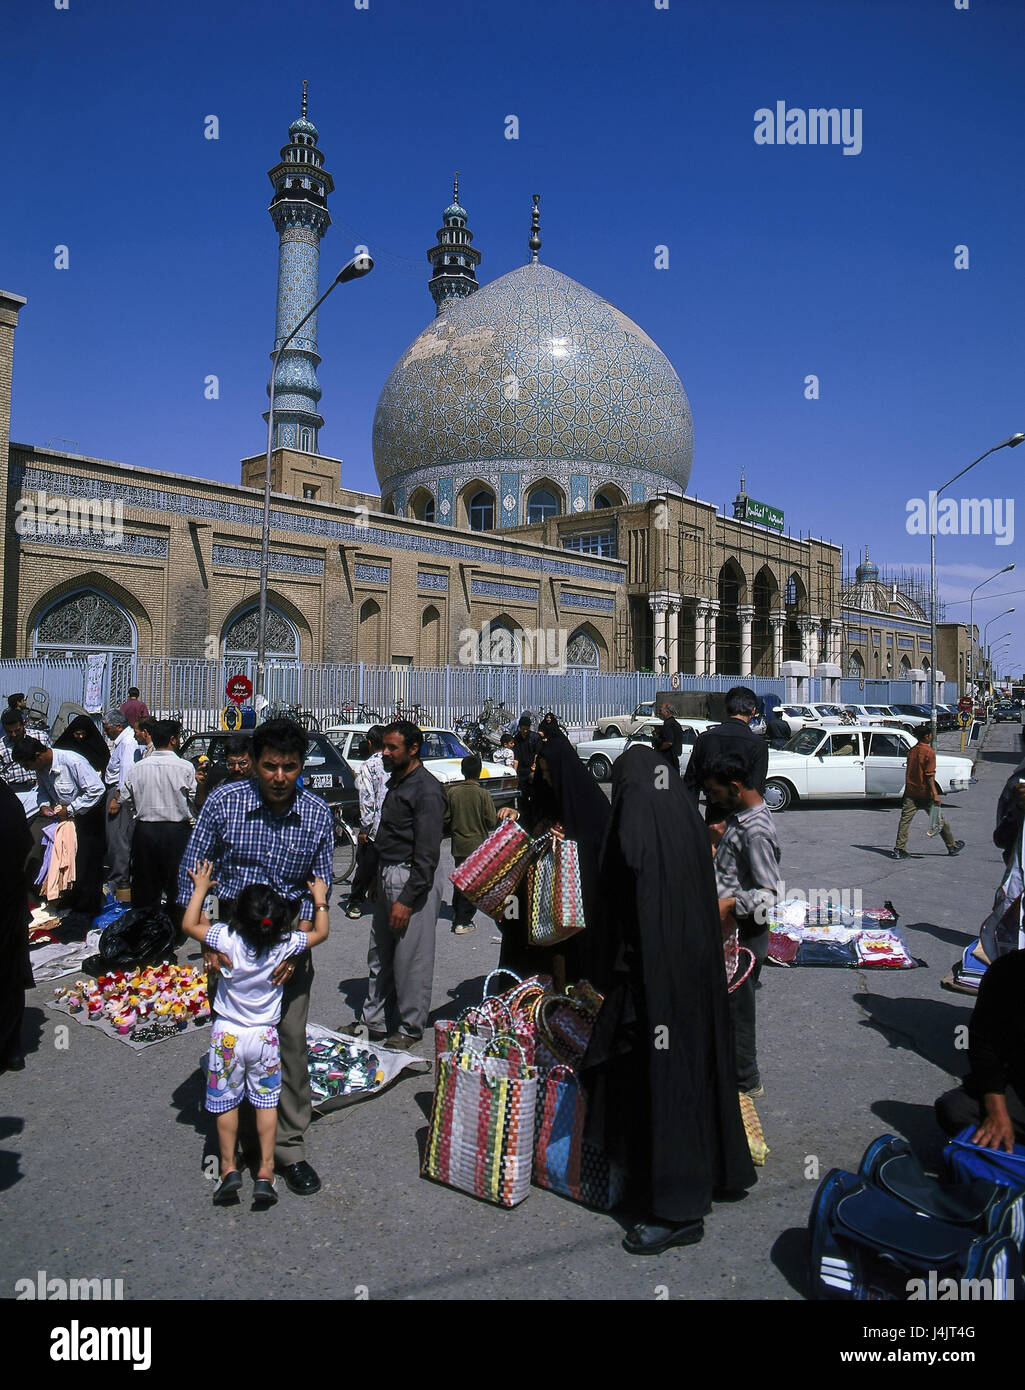 L'Iran, Ghom, la mosquée de l'imam, scène de rue, marché à l'extérieur, scène de rue, mosquée, l'imam, Jami Abbasi, lieu d'adoration, de l'église, islamique, les musulmans, les ventes, la vente Banque D'Images